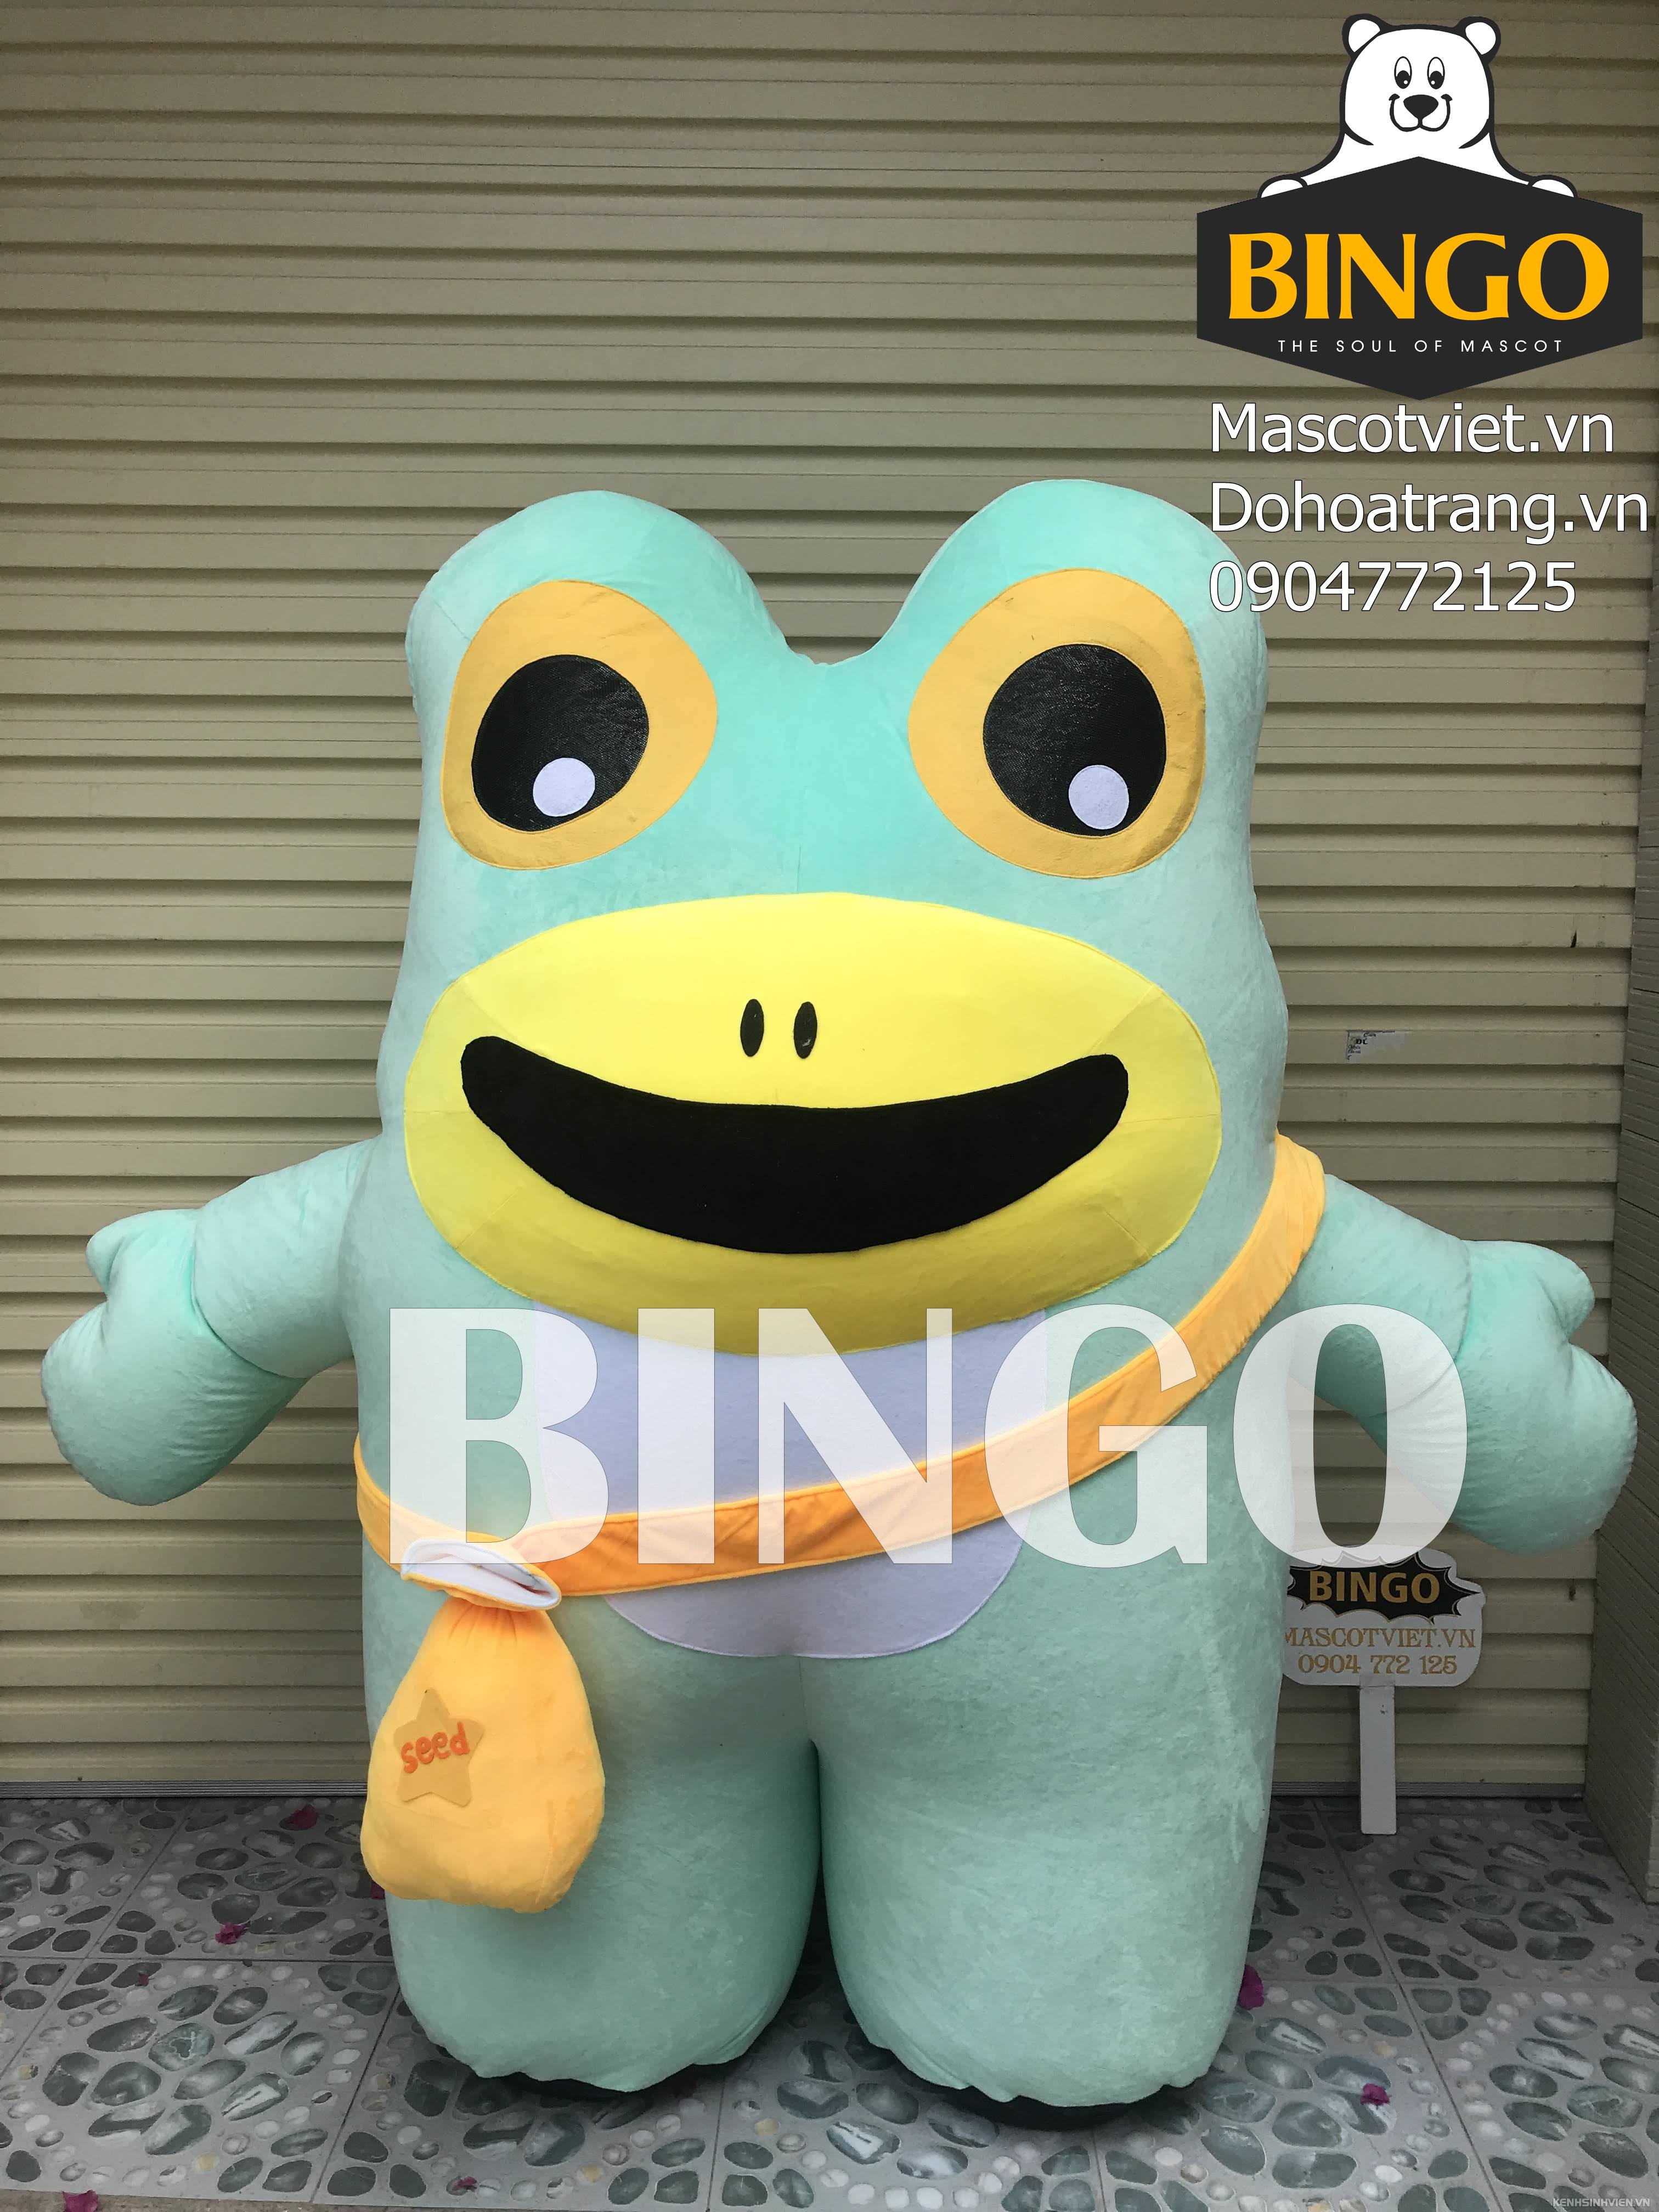 mascot-hoi-con-ech-bingo-costumes-0904772125.jpg